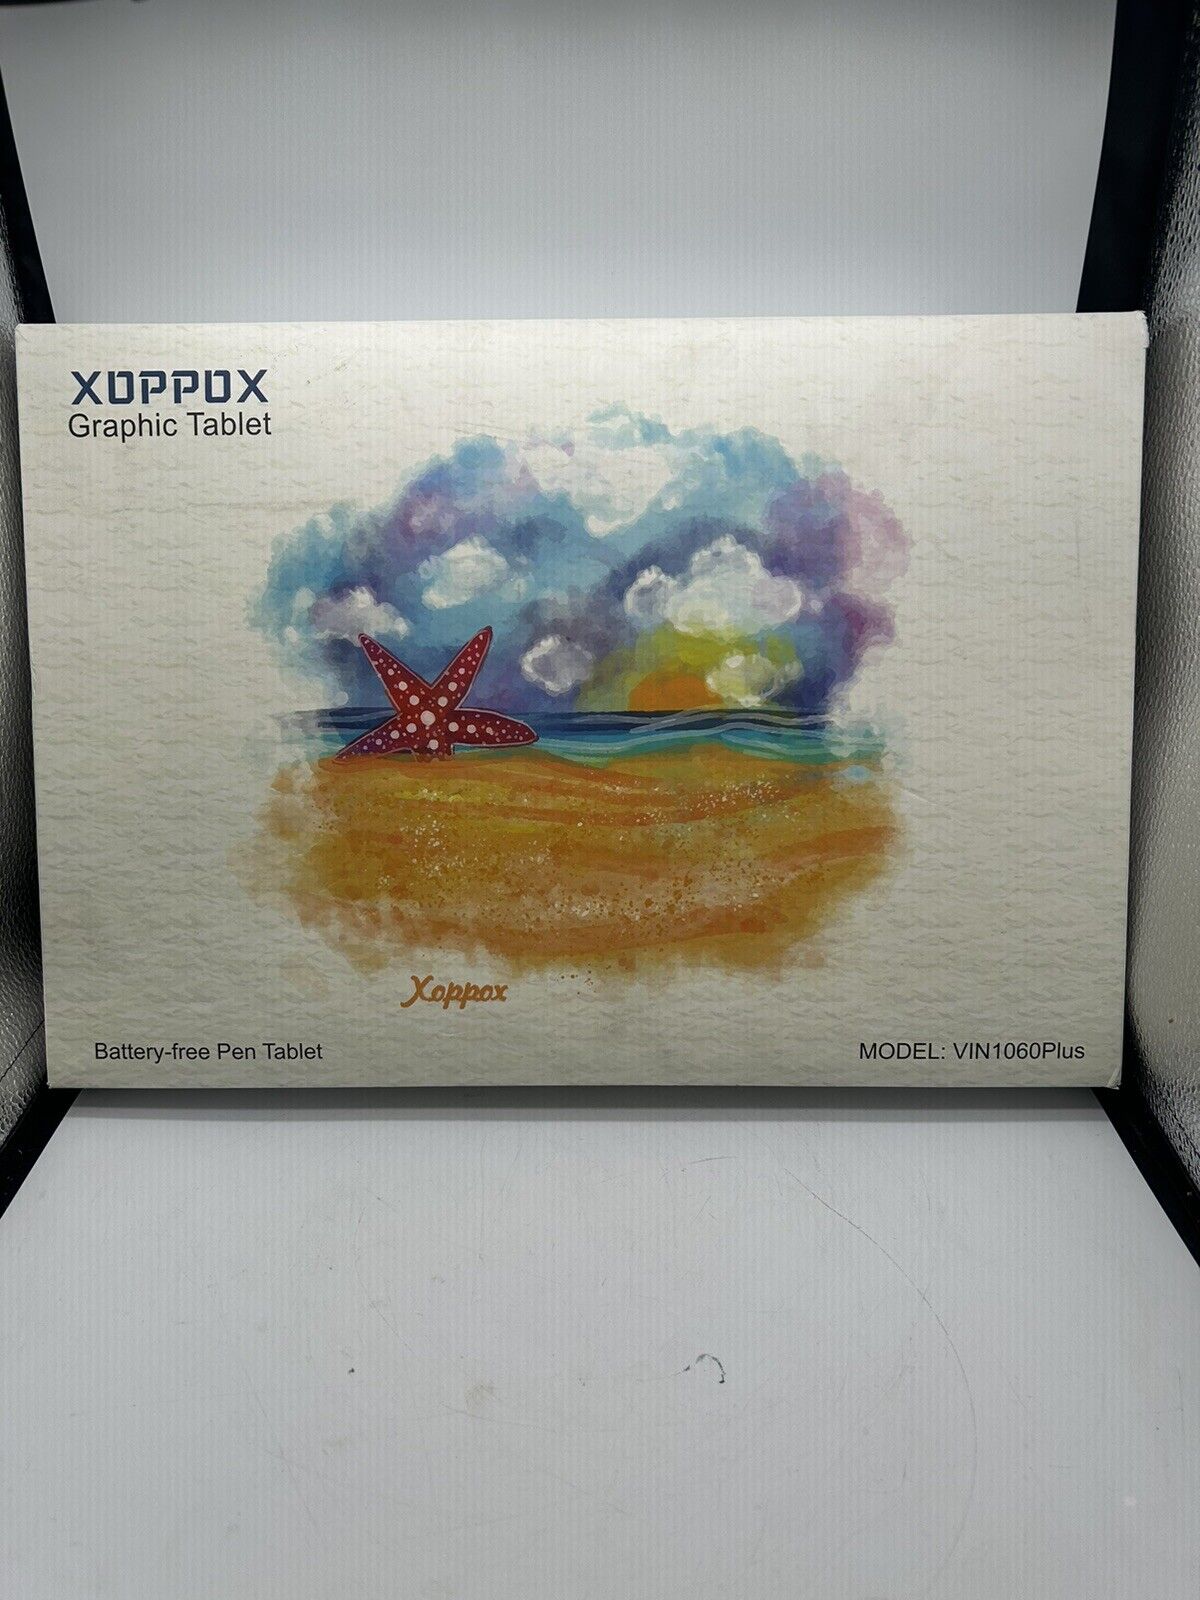 Xoppox Graphic Tablet